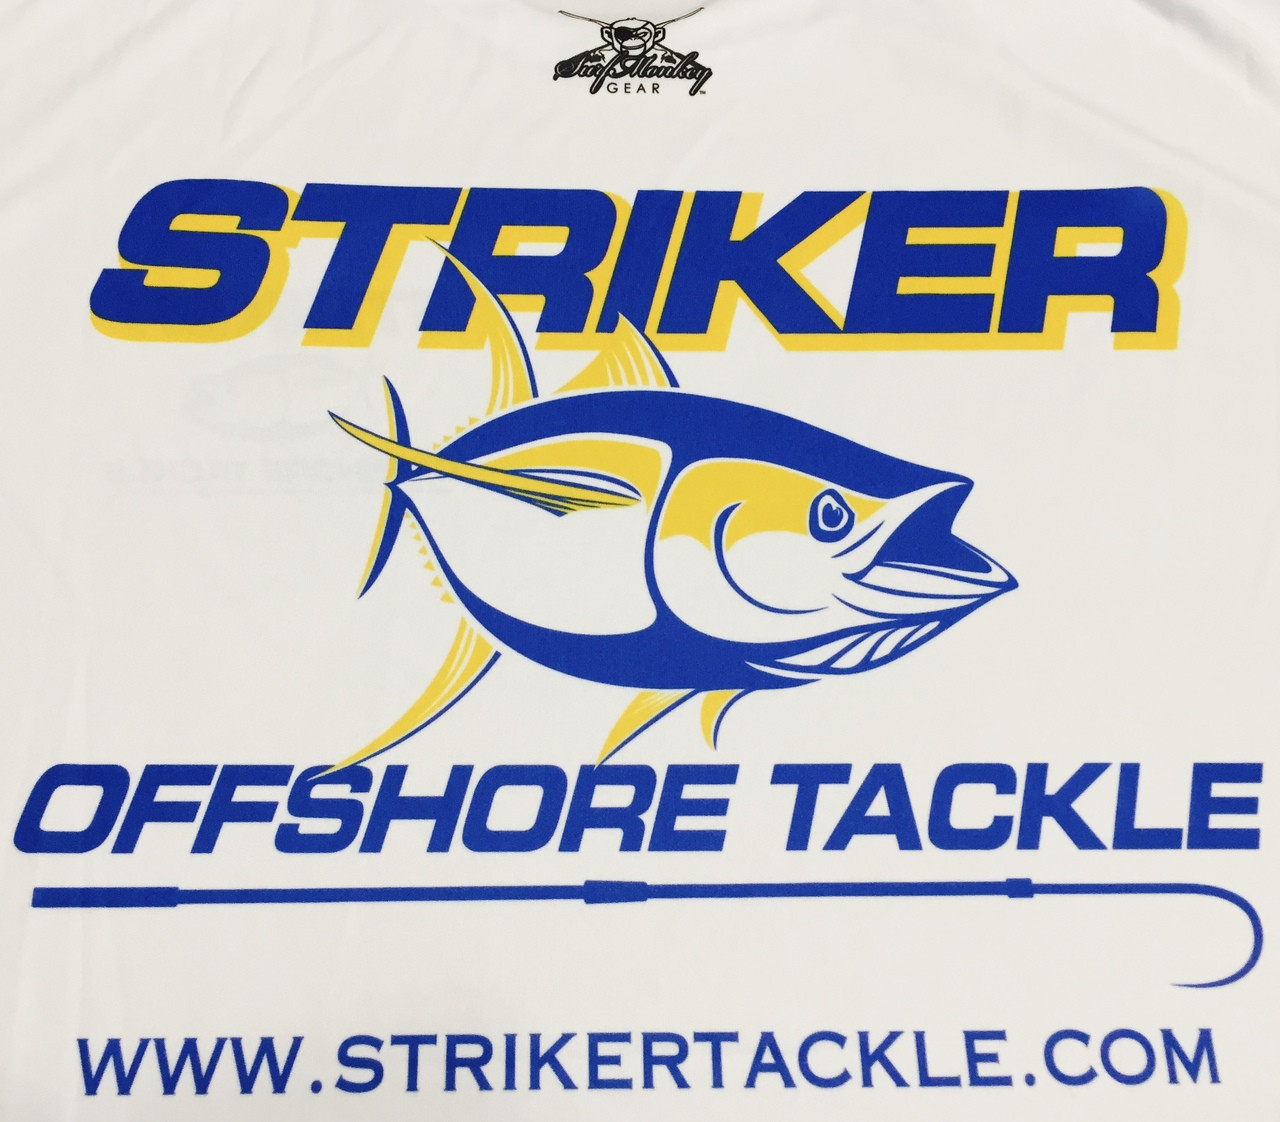 Striker Tackle High Performance Fishing Shirts. - Striker Offshore Tackle